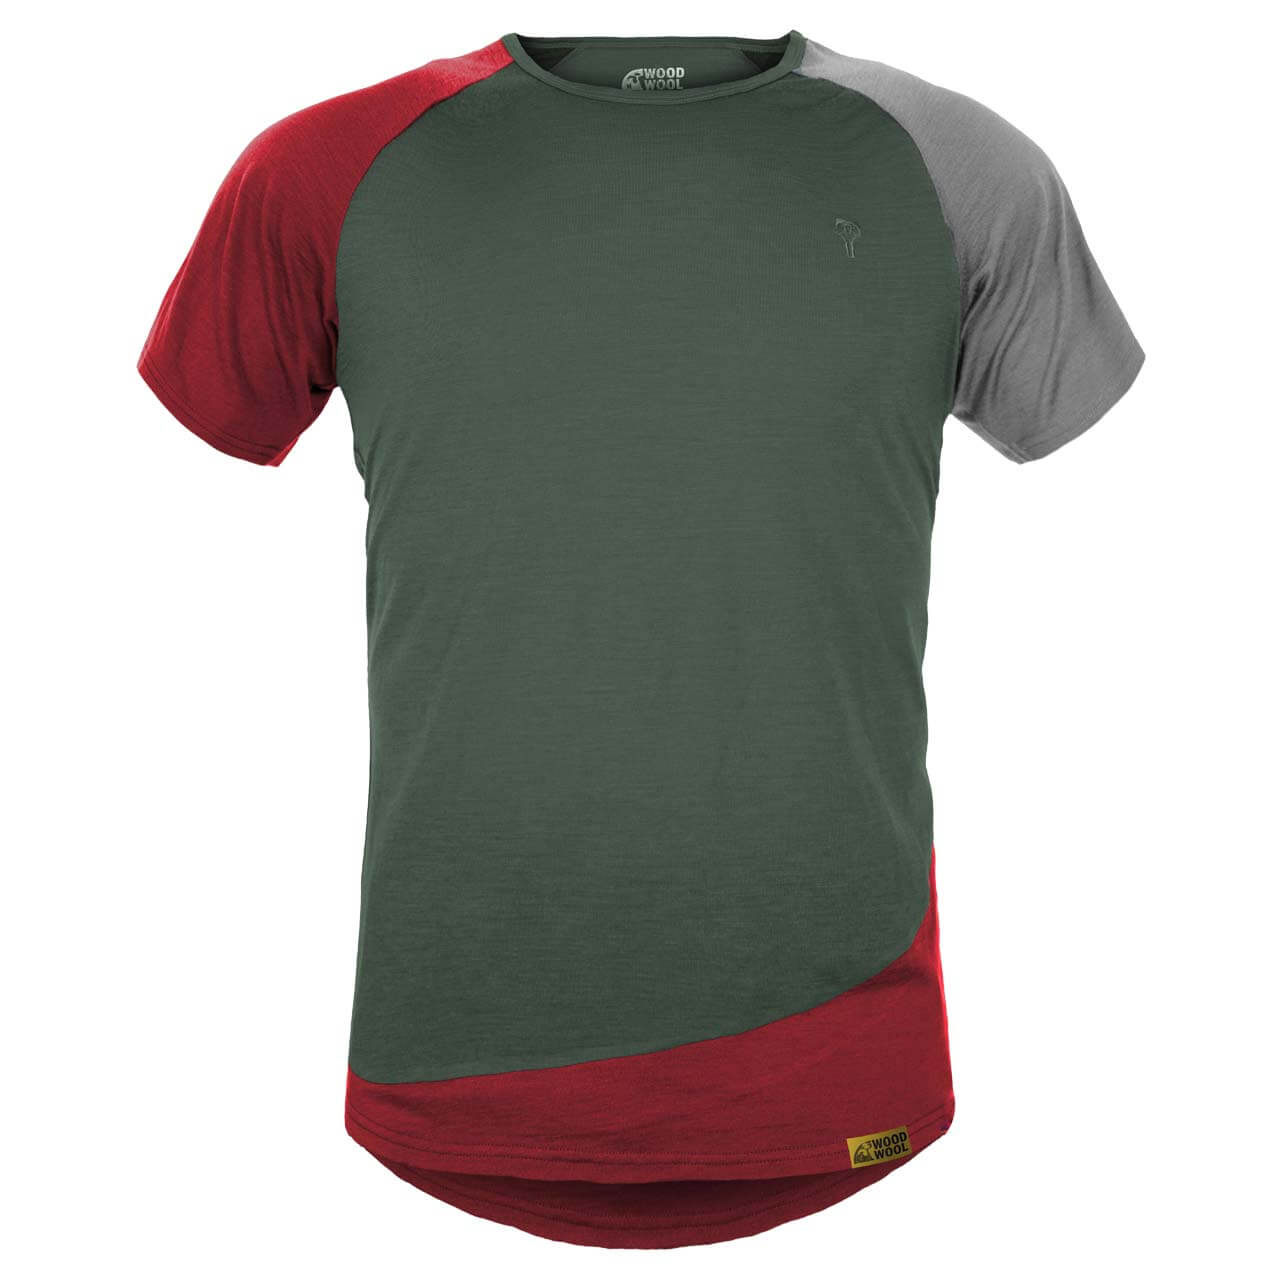 Grüezi Bag WoodWool T-Shirt Mr. Kirk - Bayberry Green, L von Grüezi Bag